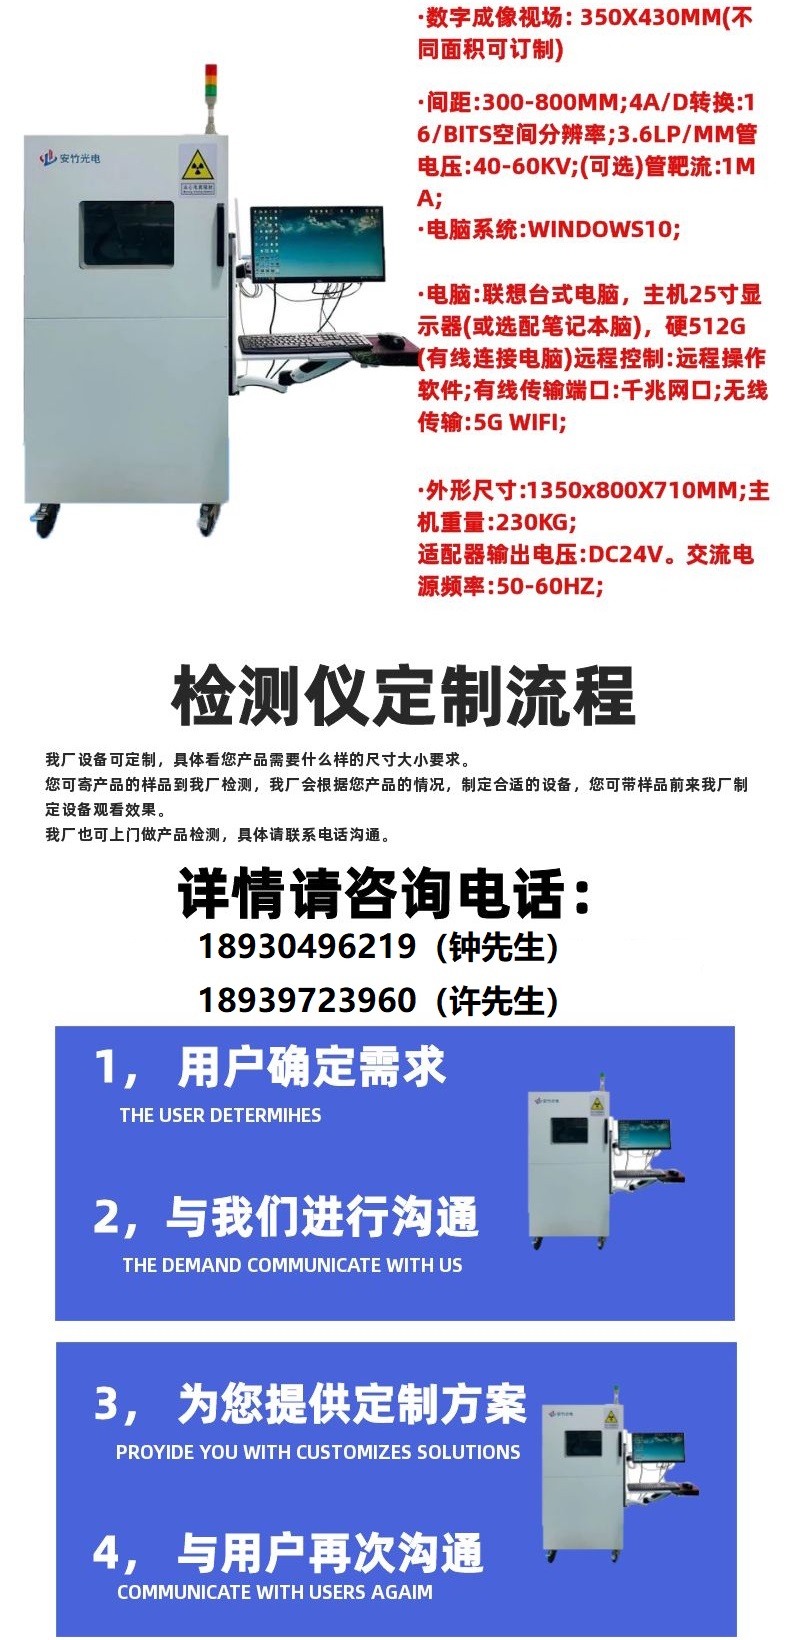 X-ray generator foreign matter detection PCB, VGA, BAG, LED, USB, IC chip detection Plastic detection